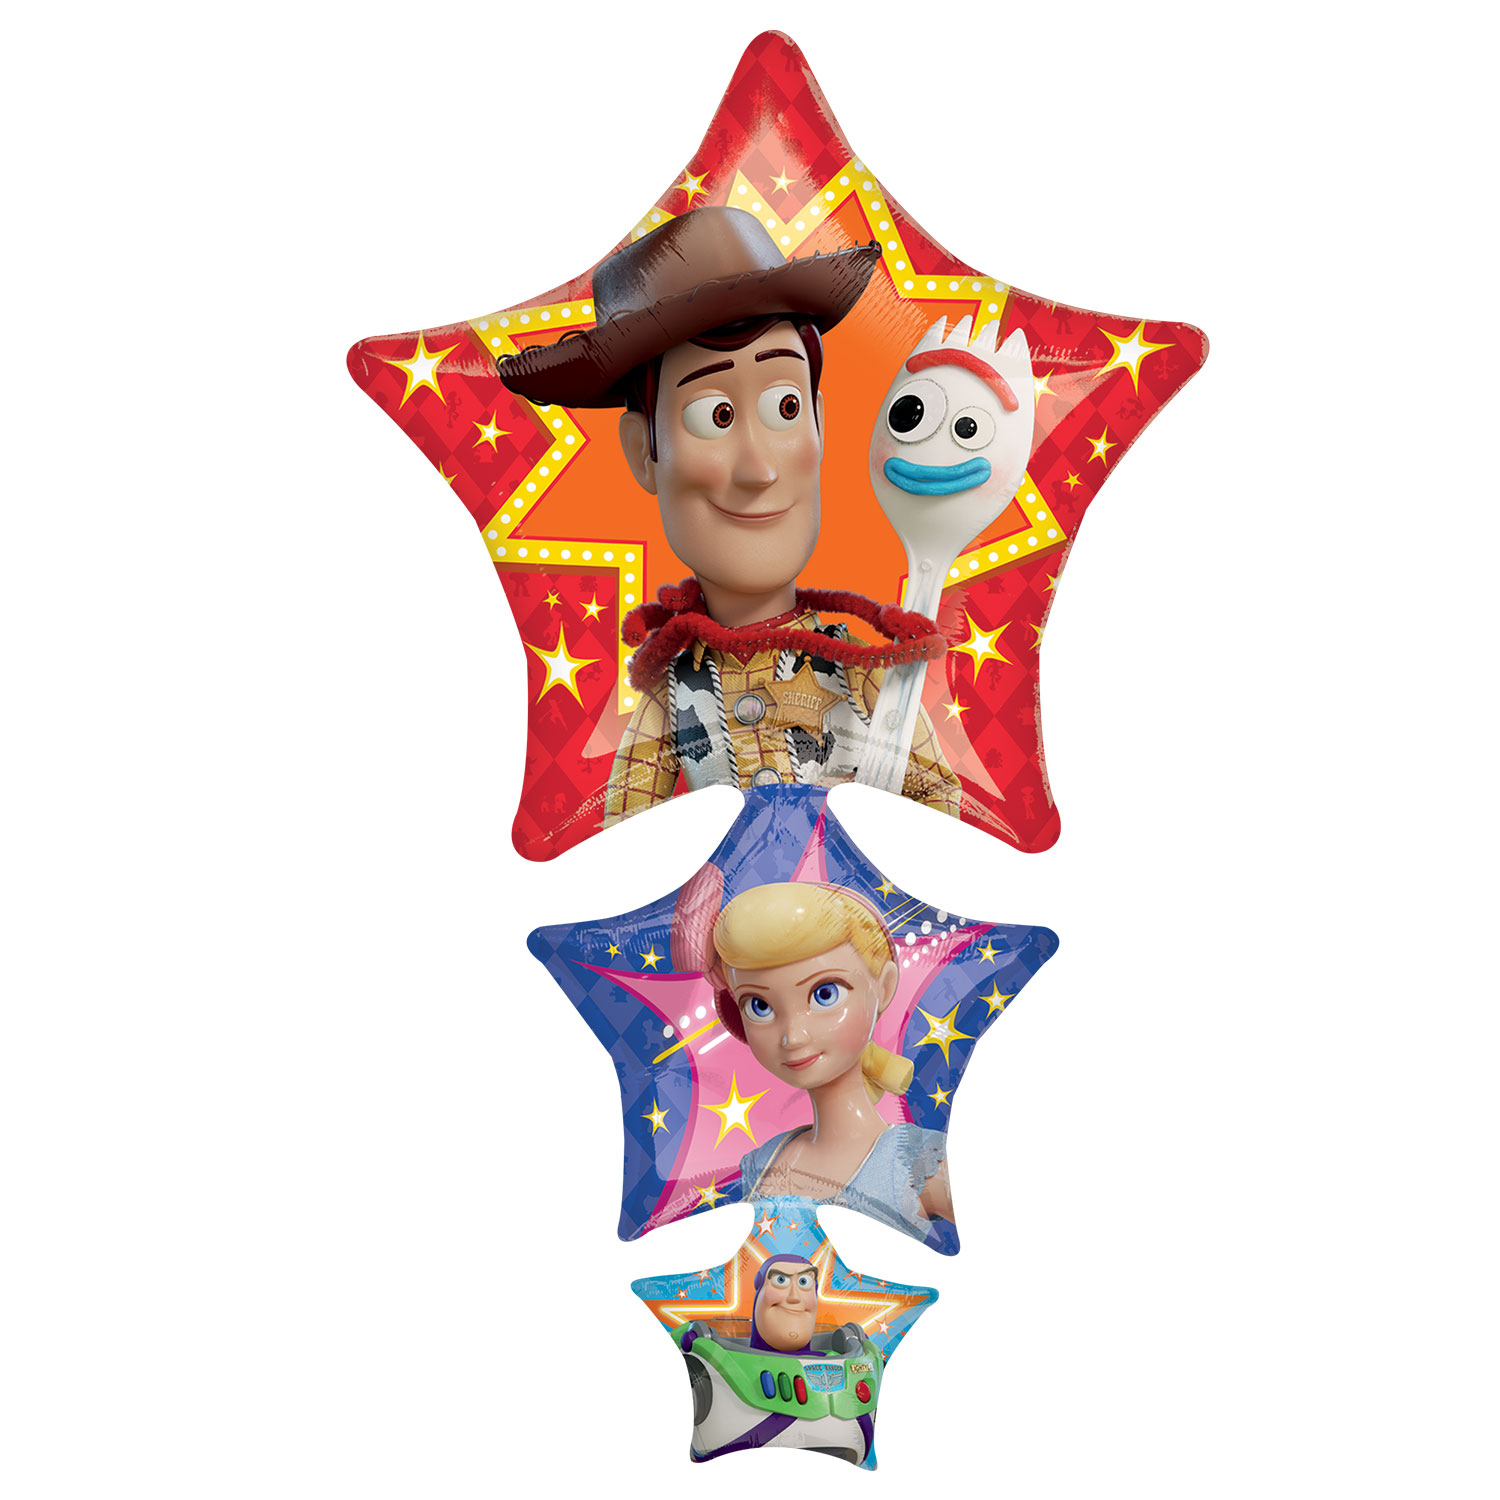 Woody 55 cm x 111 cm Amscan 3987201-SUPERSHAPE diapositives Ballon-Toy Story 4